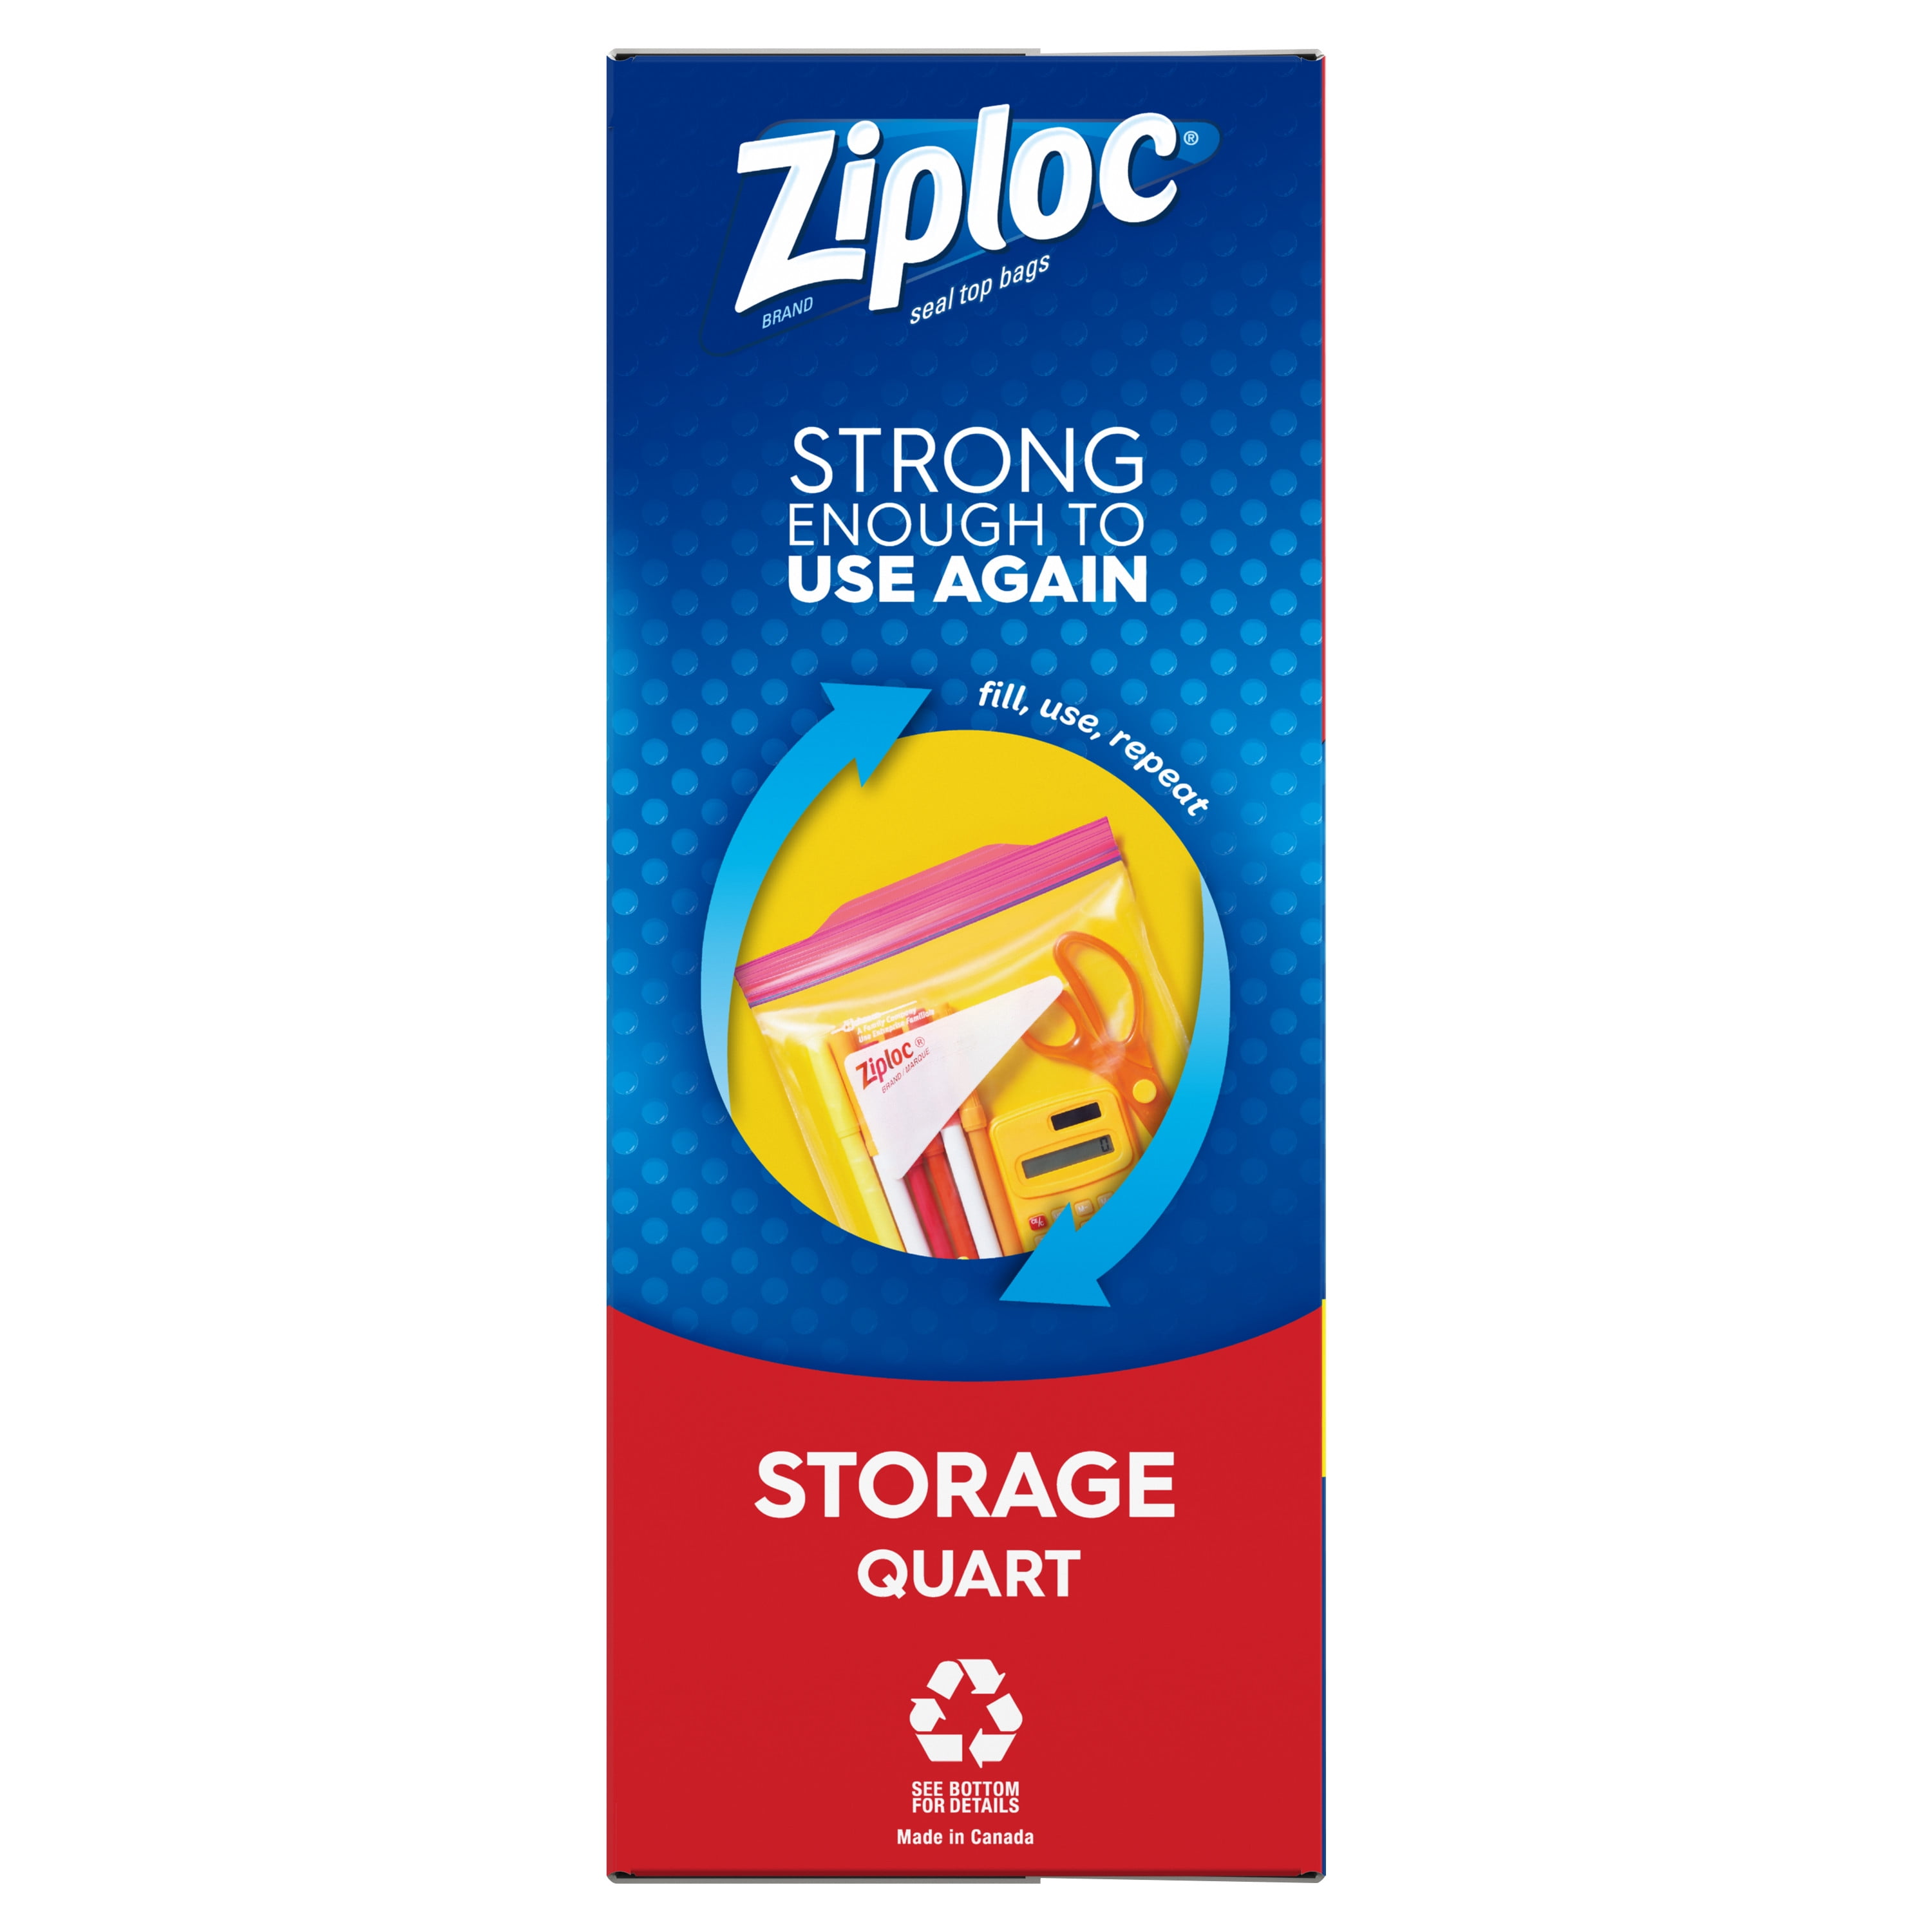 Ziploc® Brand Storage Quart Bags, Plastic Storage Bags for Food, 48 Count 